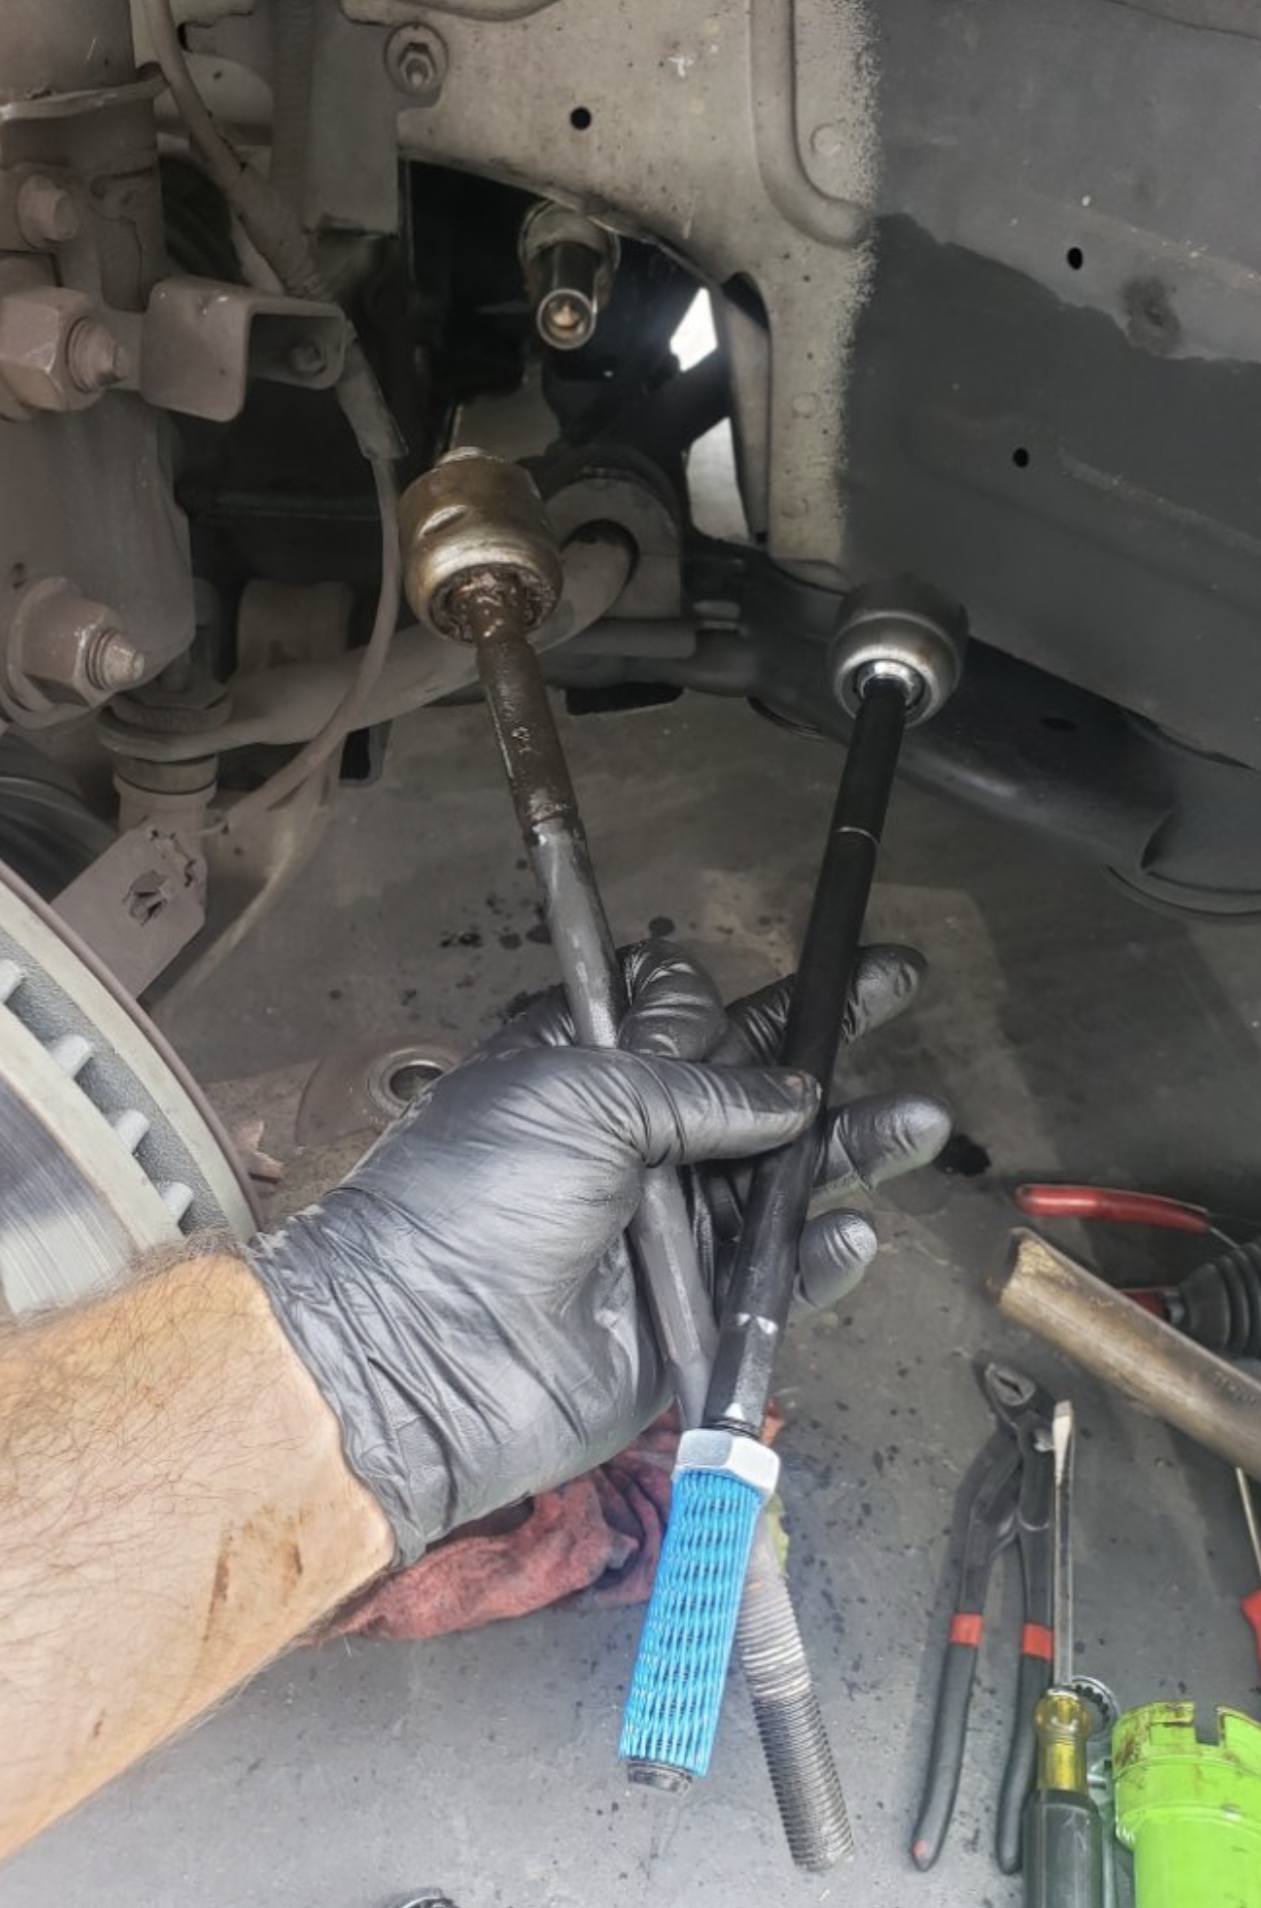 this image shows car repair in San Diego, CA